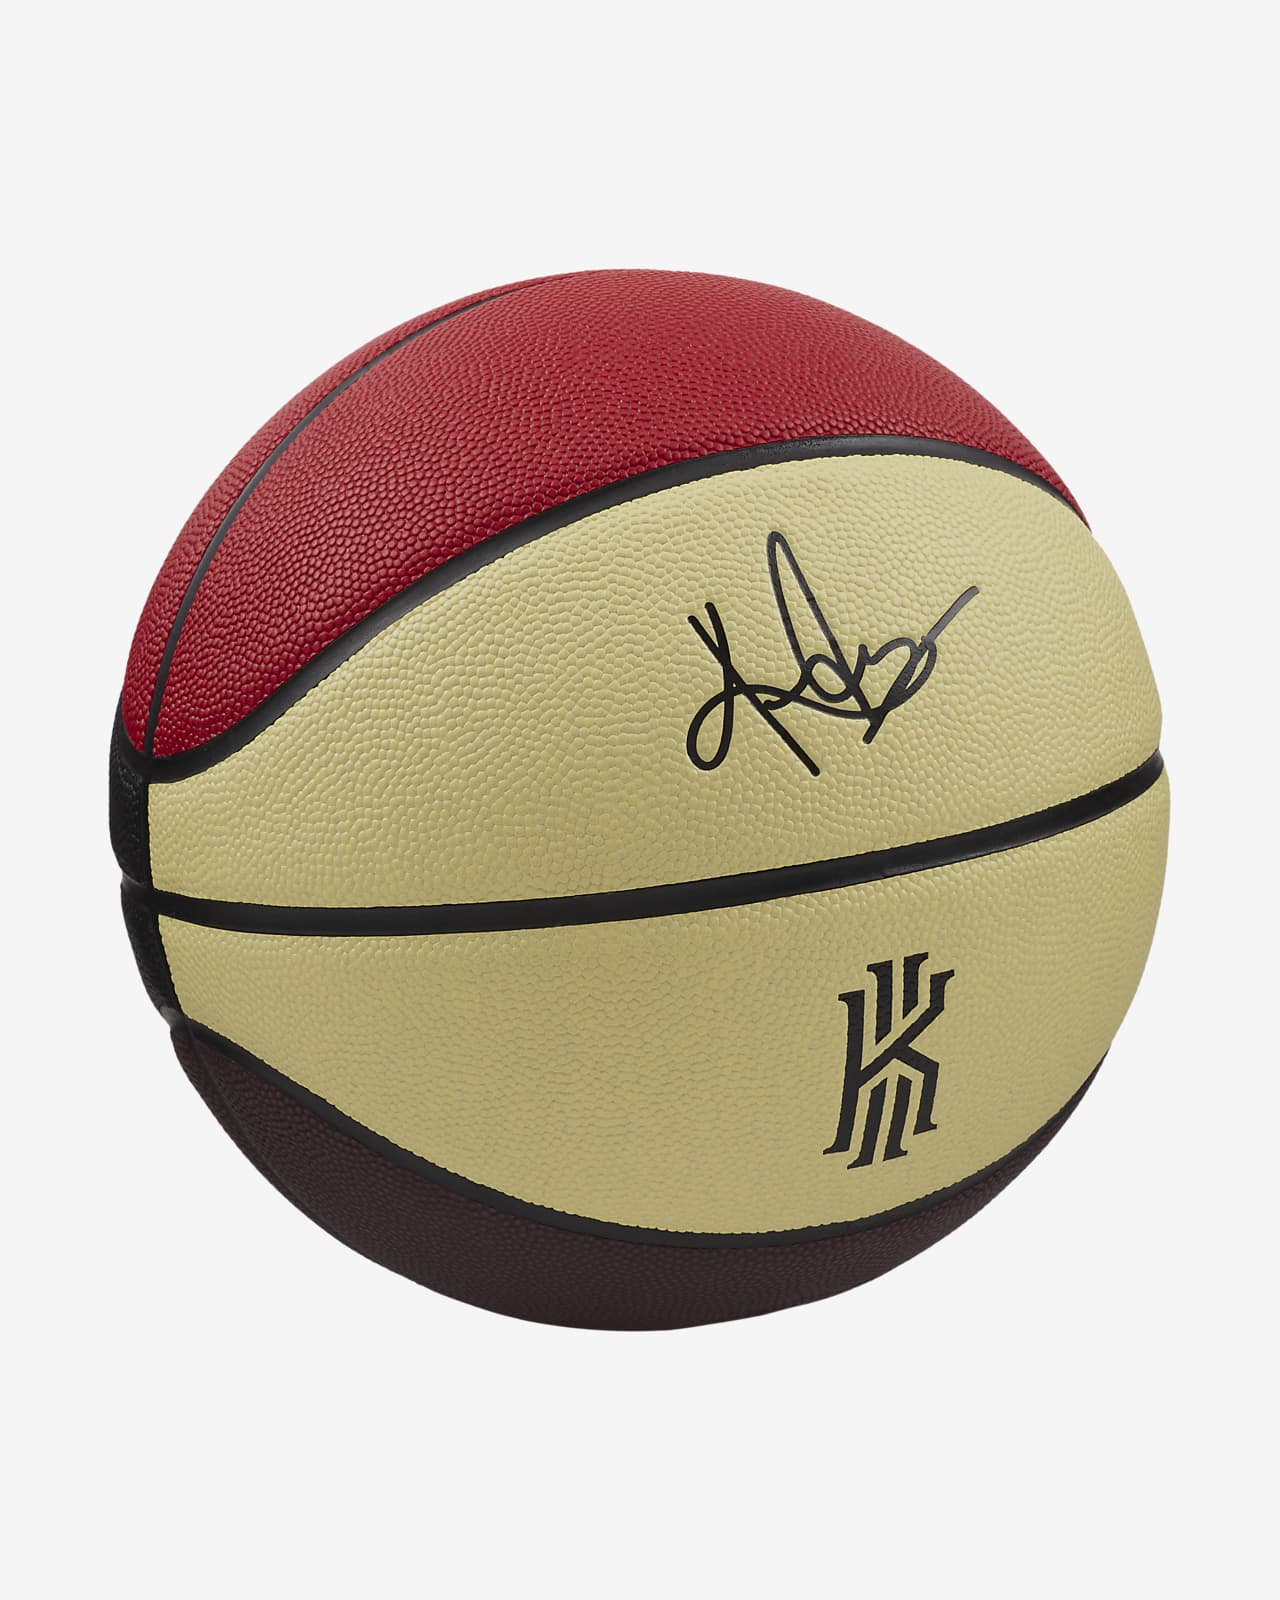 Kyrie Crossover Basketball. Nike ID